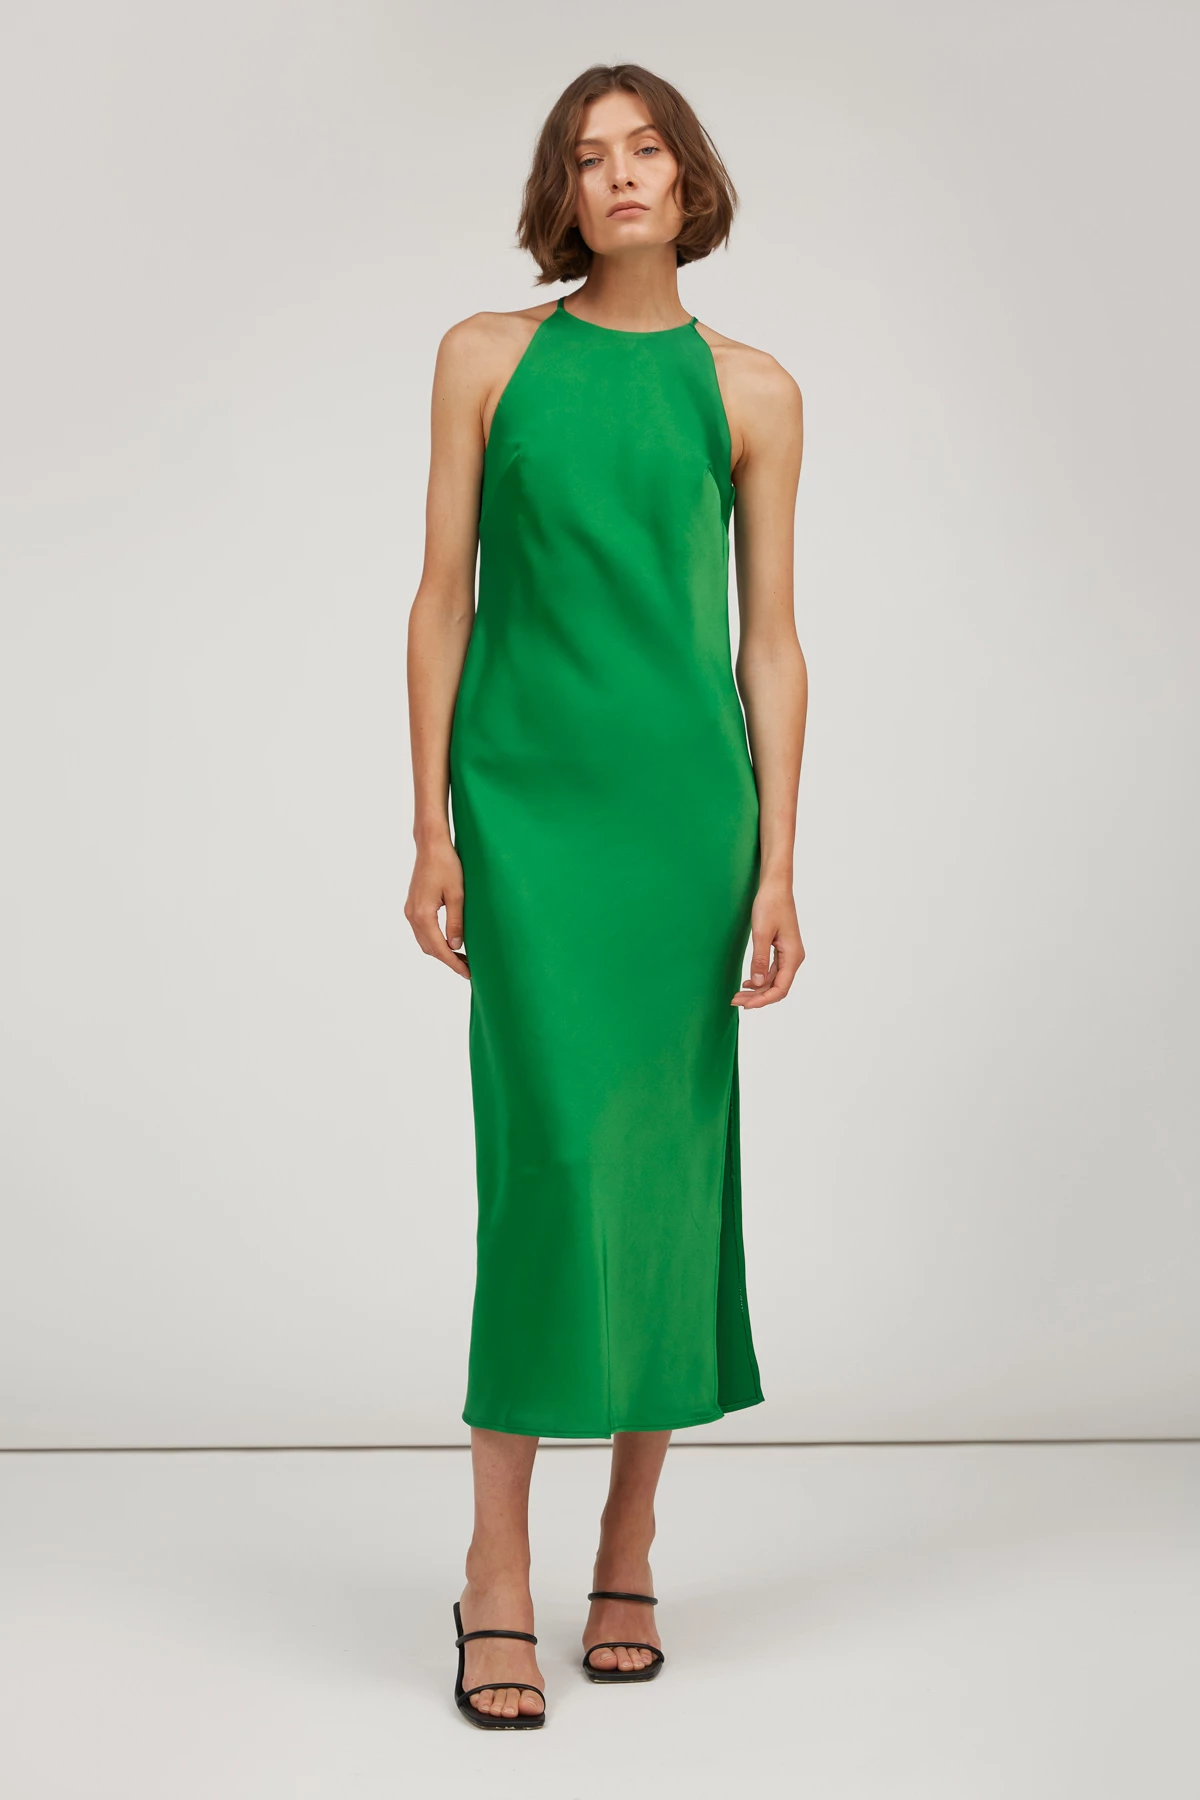 Green satin slip dress, photo 2